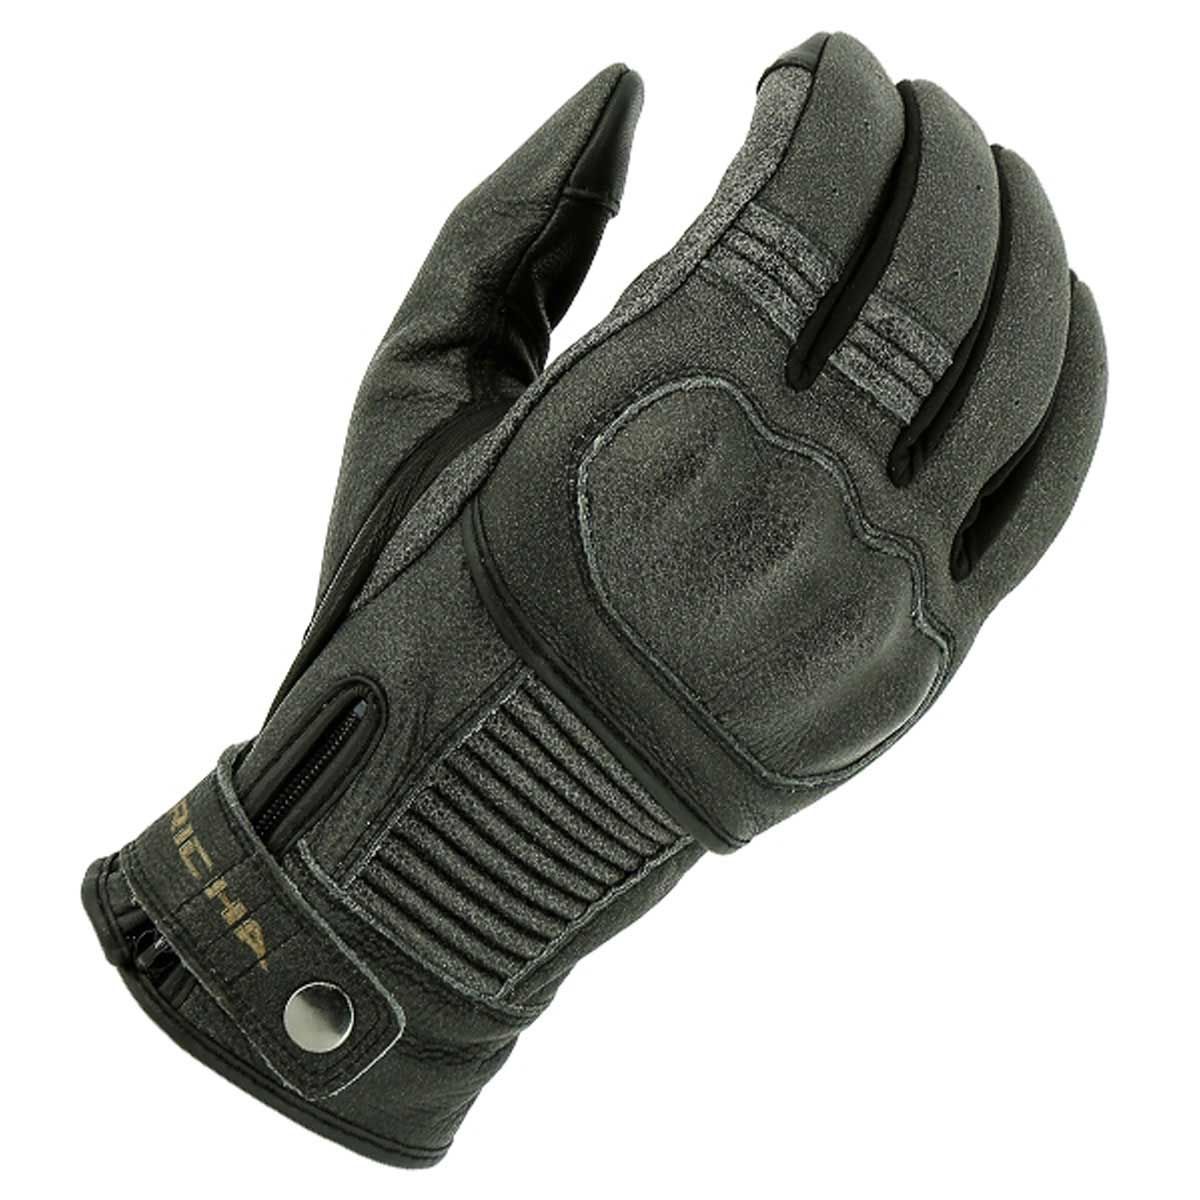 Jinjin Super Wear-Resistant Anti-Skid Unisex Outdoor Sports Riding Gloves Tight Shock-Absorbing Gloves Have Better Grip According to Ergonomic Design 